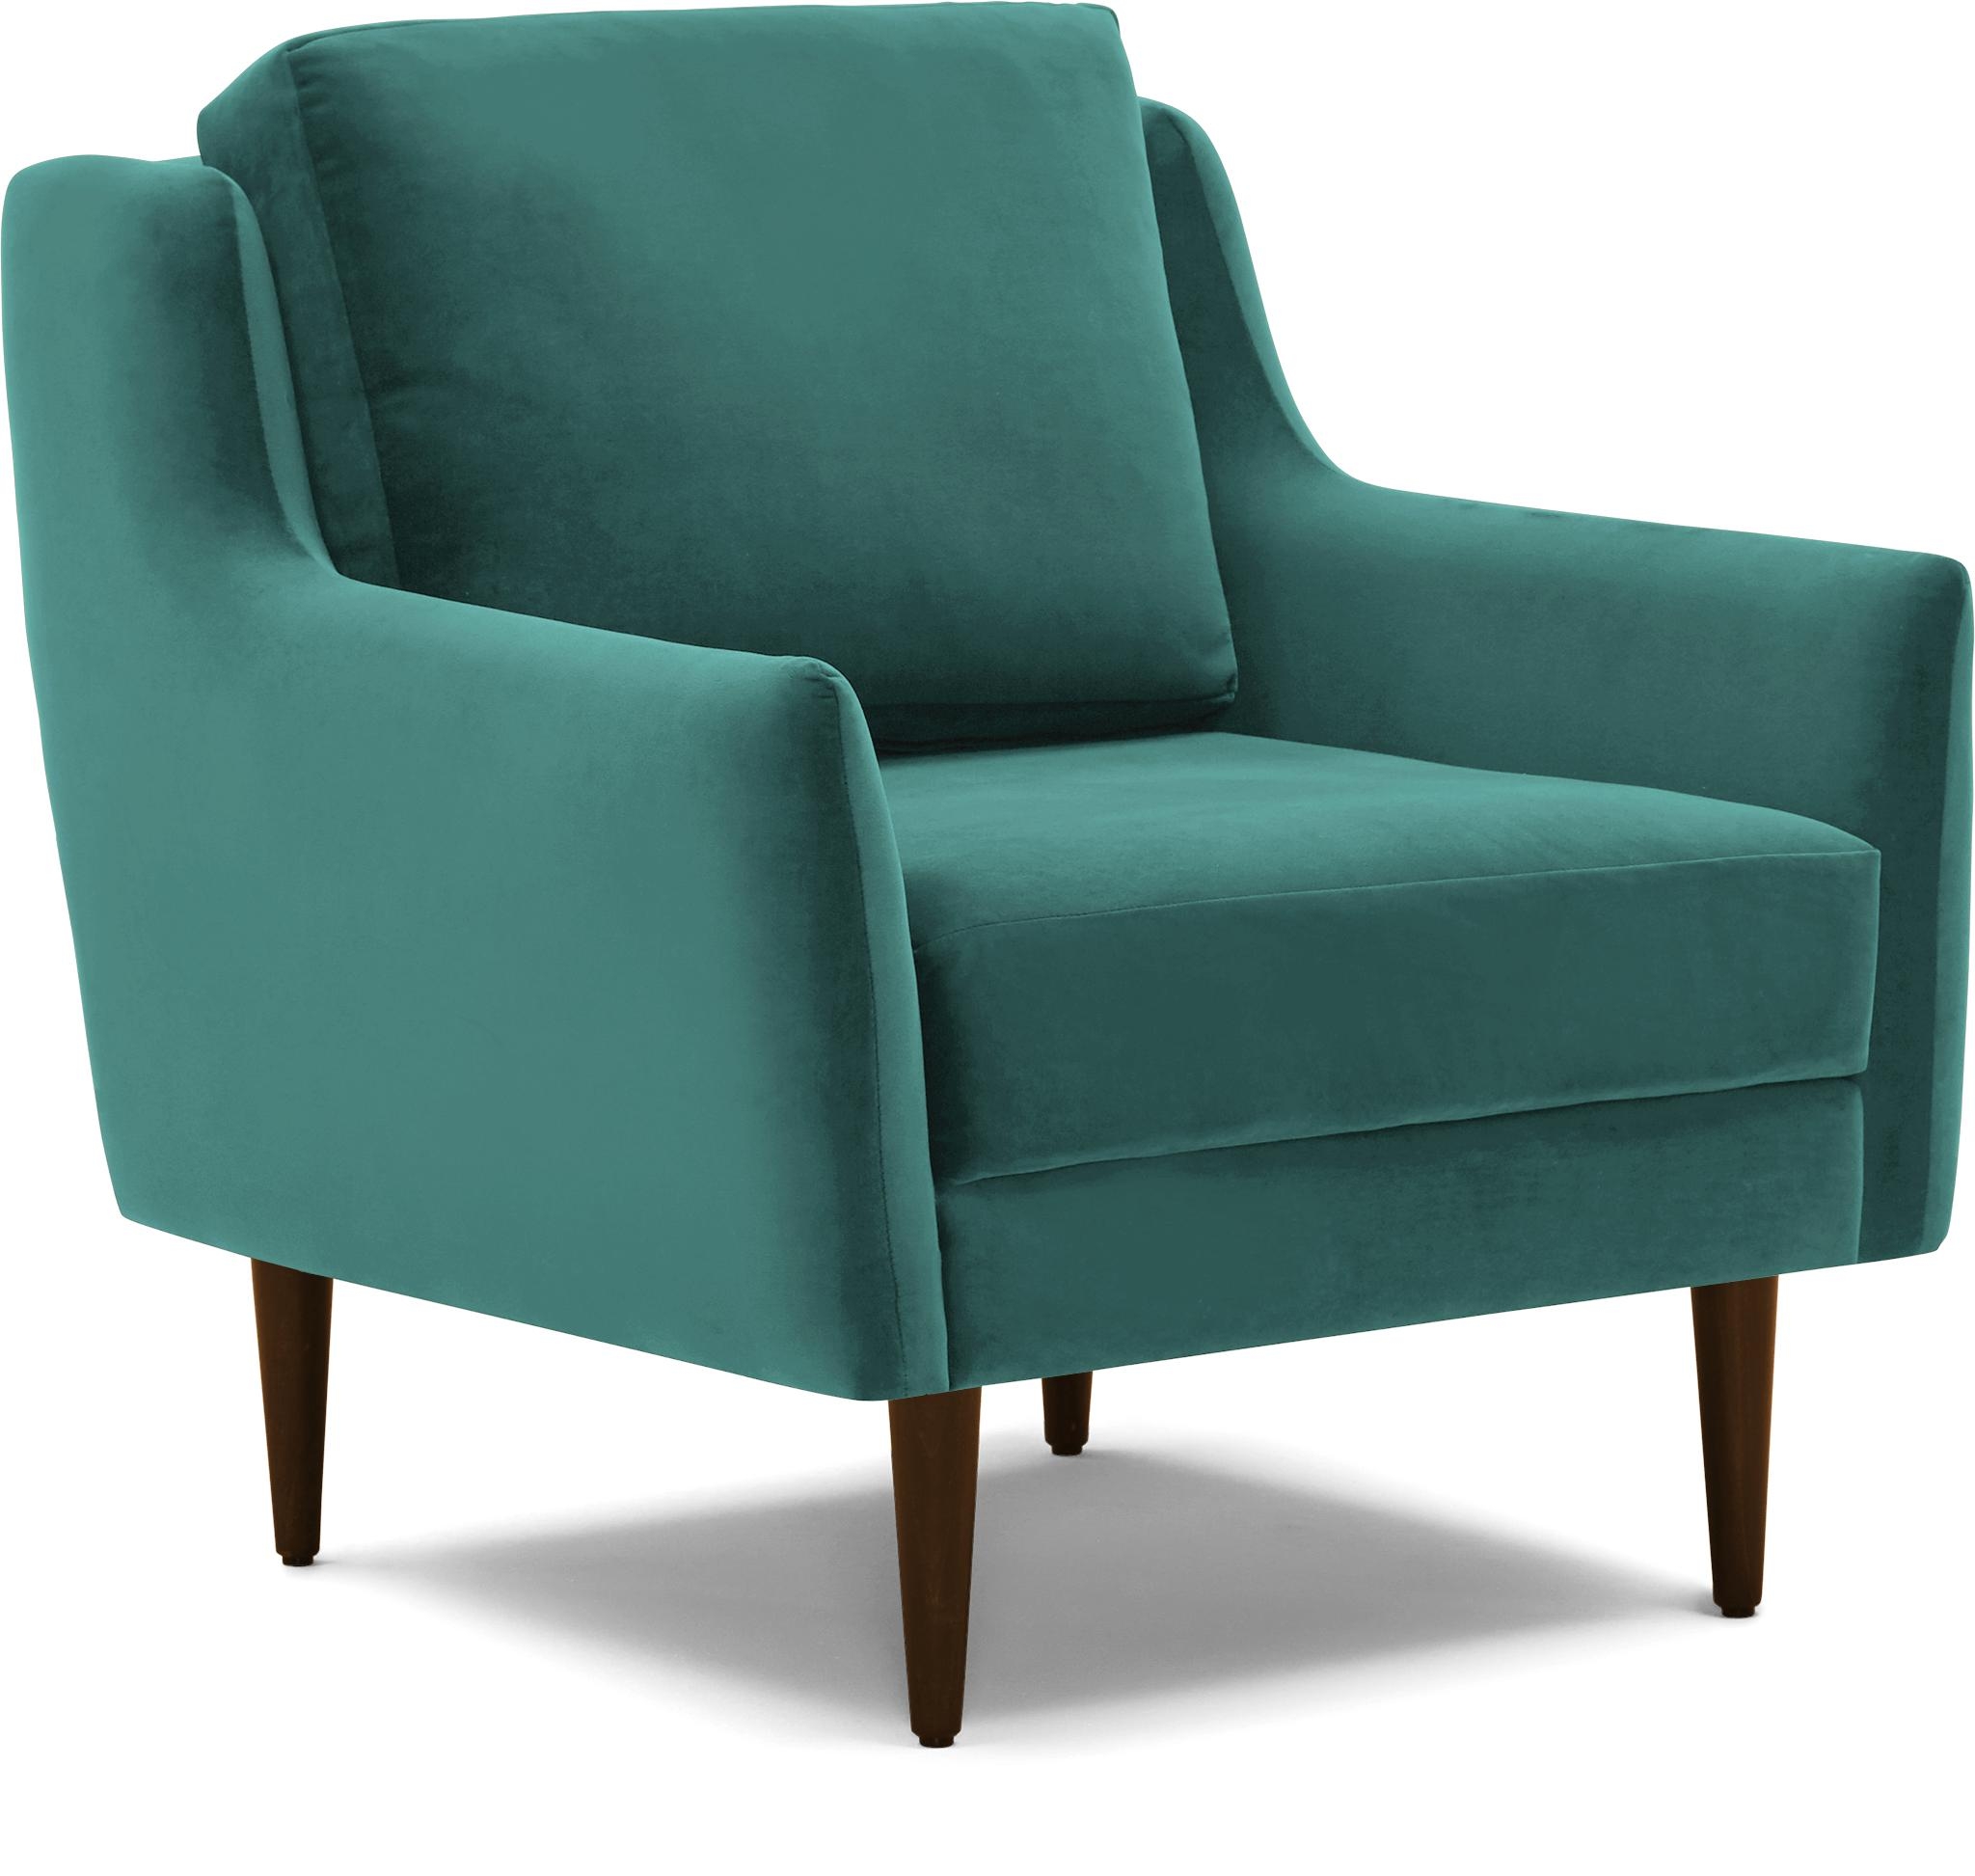 Green Bell Mid Century Modern Chair - Essence Aqua - Mocha - Image 1